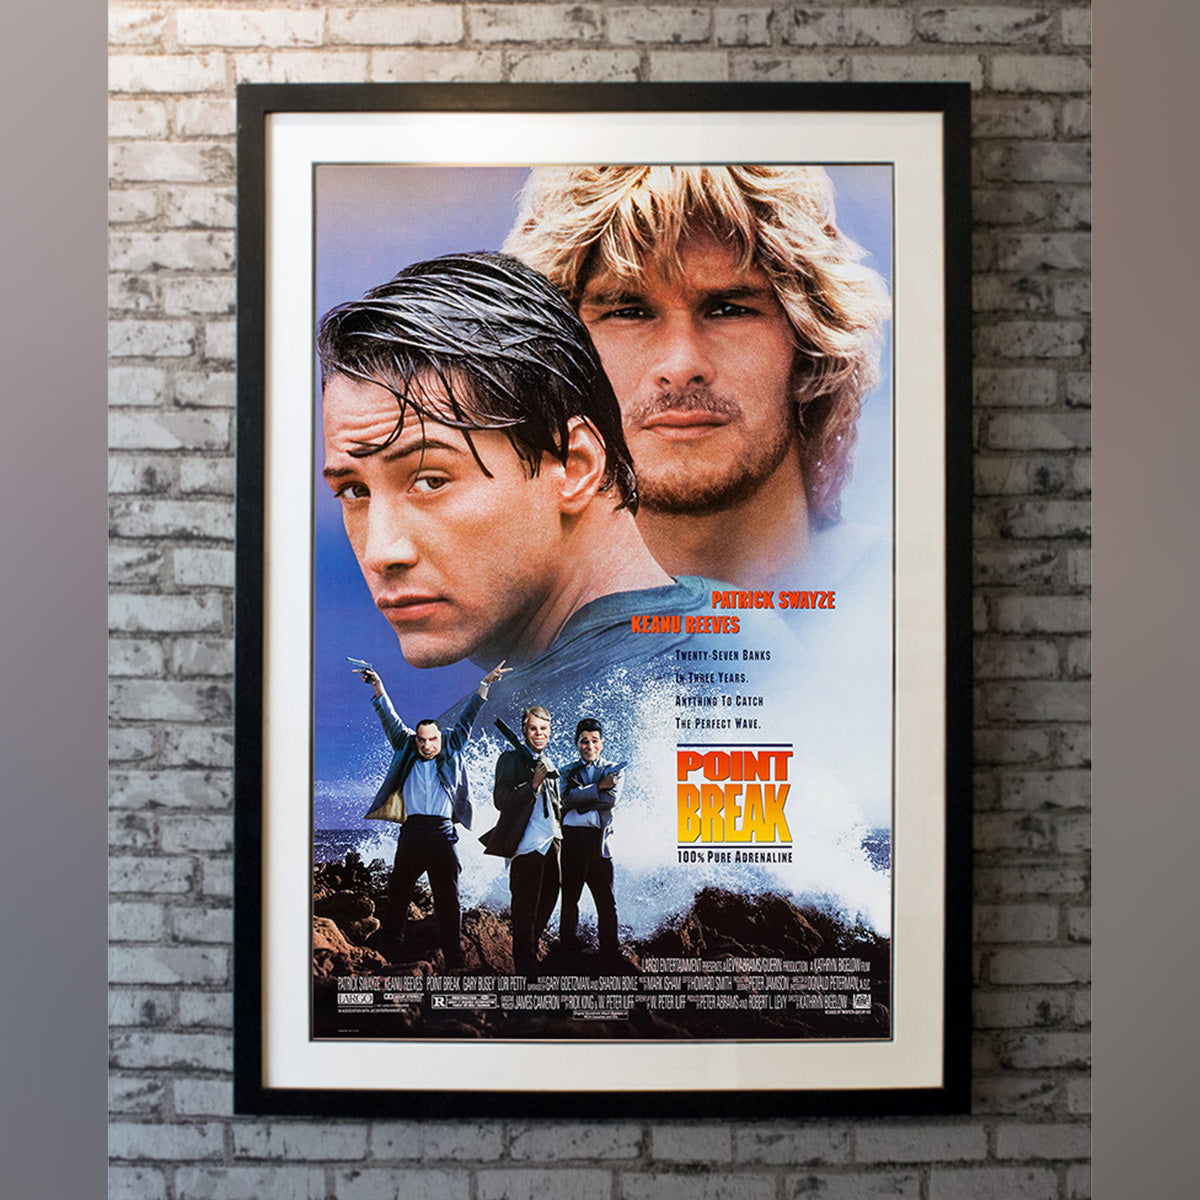 Original Movie Poster of Point Break (1991)